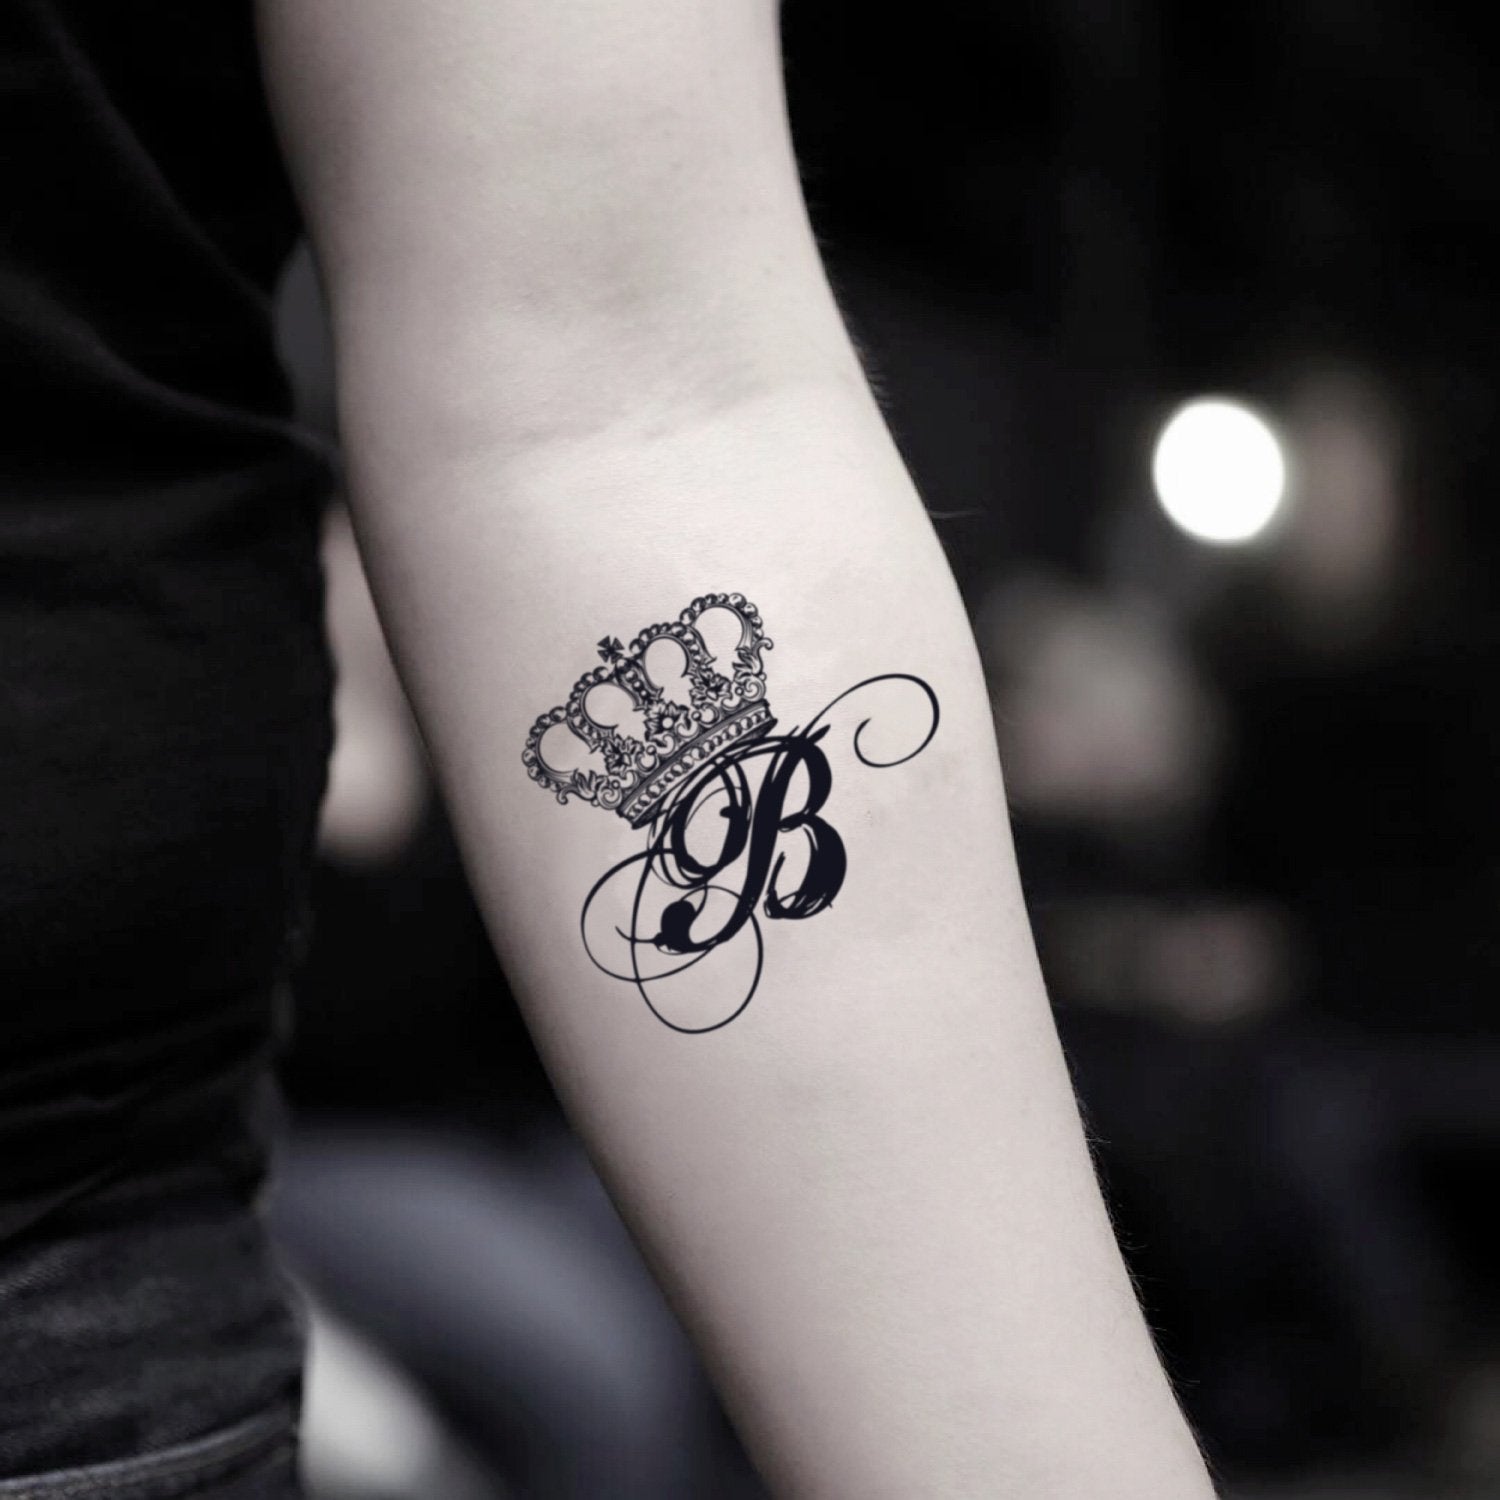 15+ Magnificent Queen Tattoo Designs And Ideas! | Crown tattoos for women,  Back tattoo women, Crown tattoo design